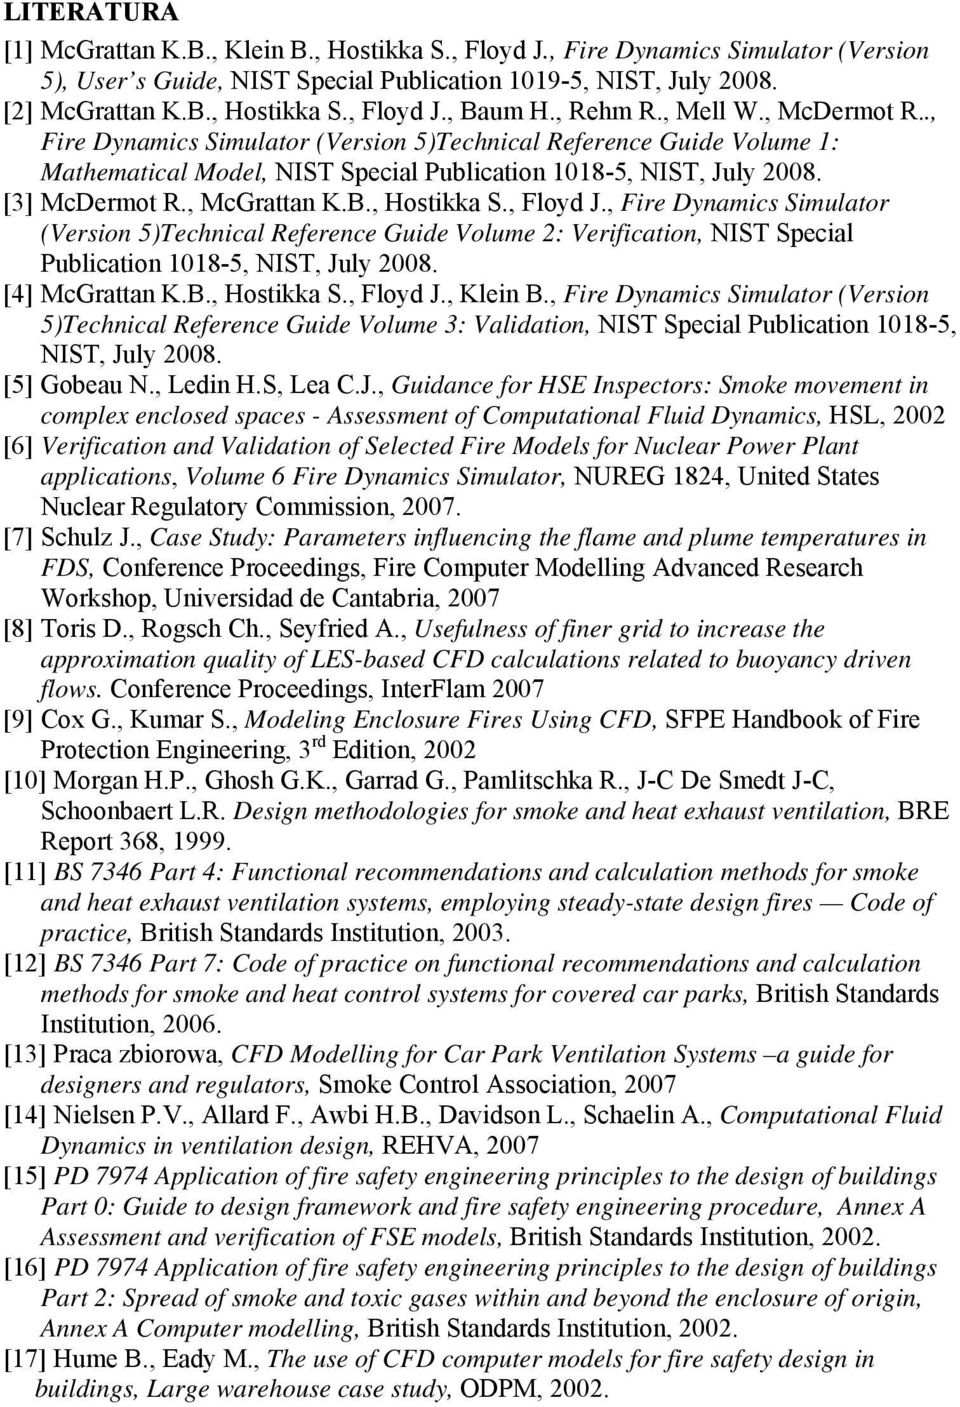 , McGrattan K.B., Hostikka S., Floyd J., Fire Dynamics Simulator (Version 5)Technical Reference Guide Volume 2: Verification, NIST Special Publication 1018-5, NIST, July 2008. [4] McGrattan K.B., Hostikka S., Floyd J., Klein B.